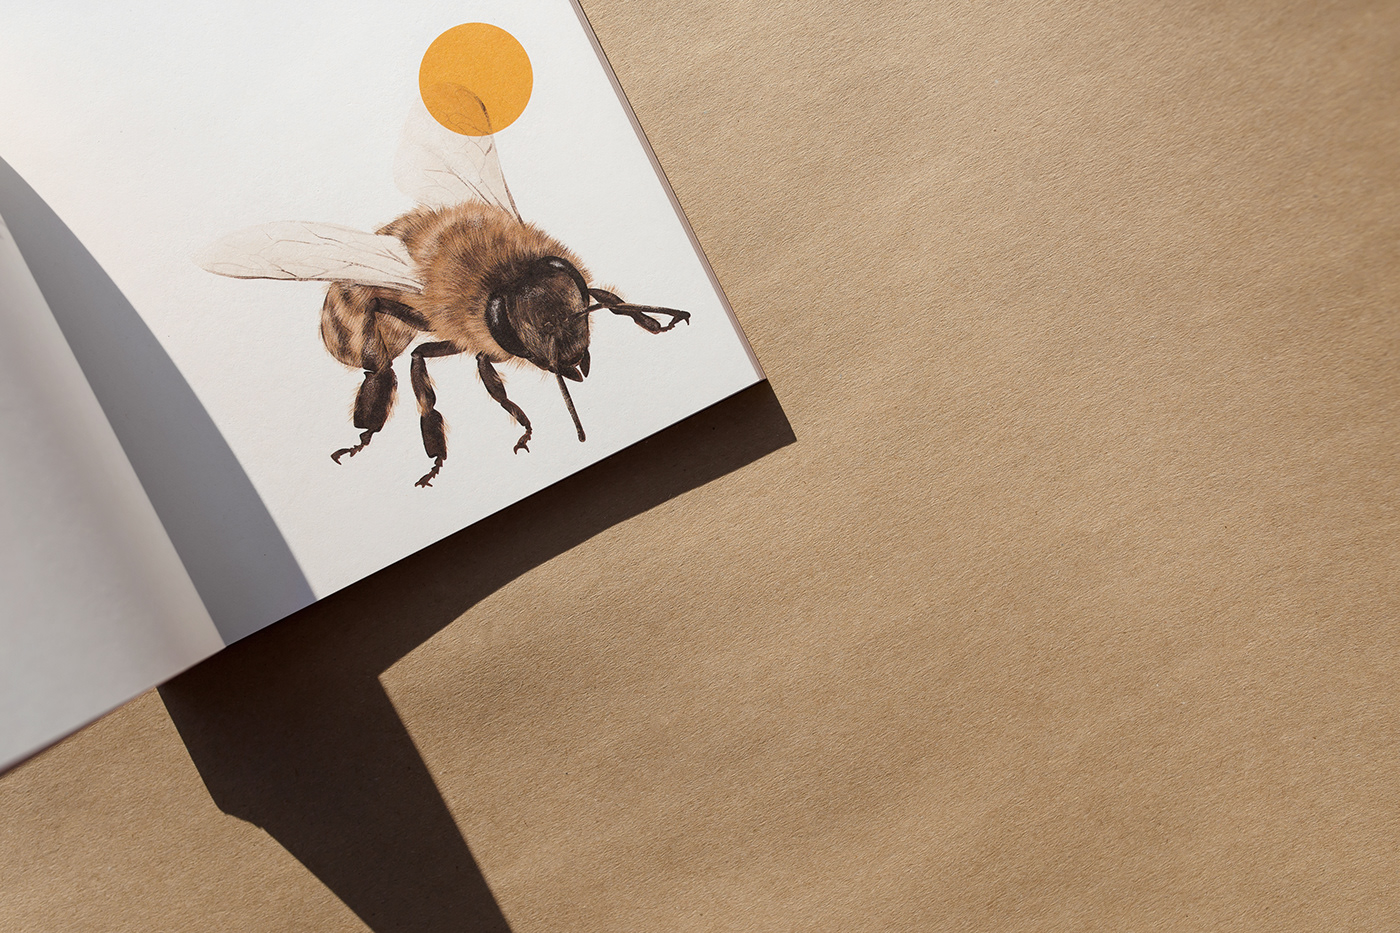 bee illustrations book design book illlustration Book Layout